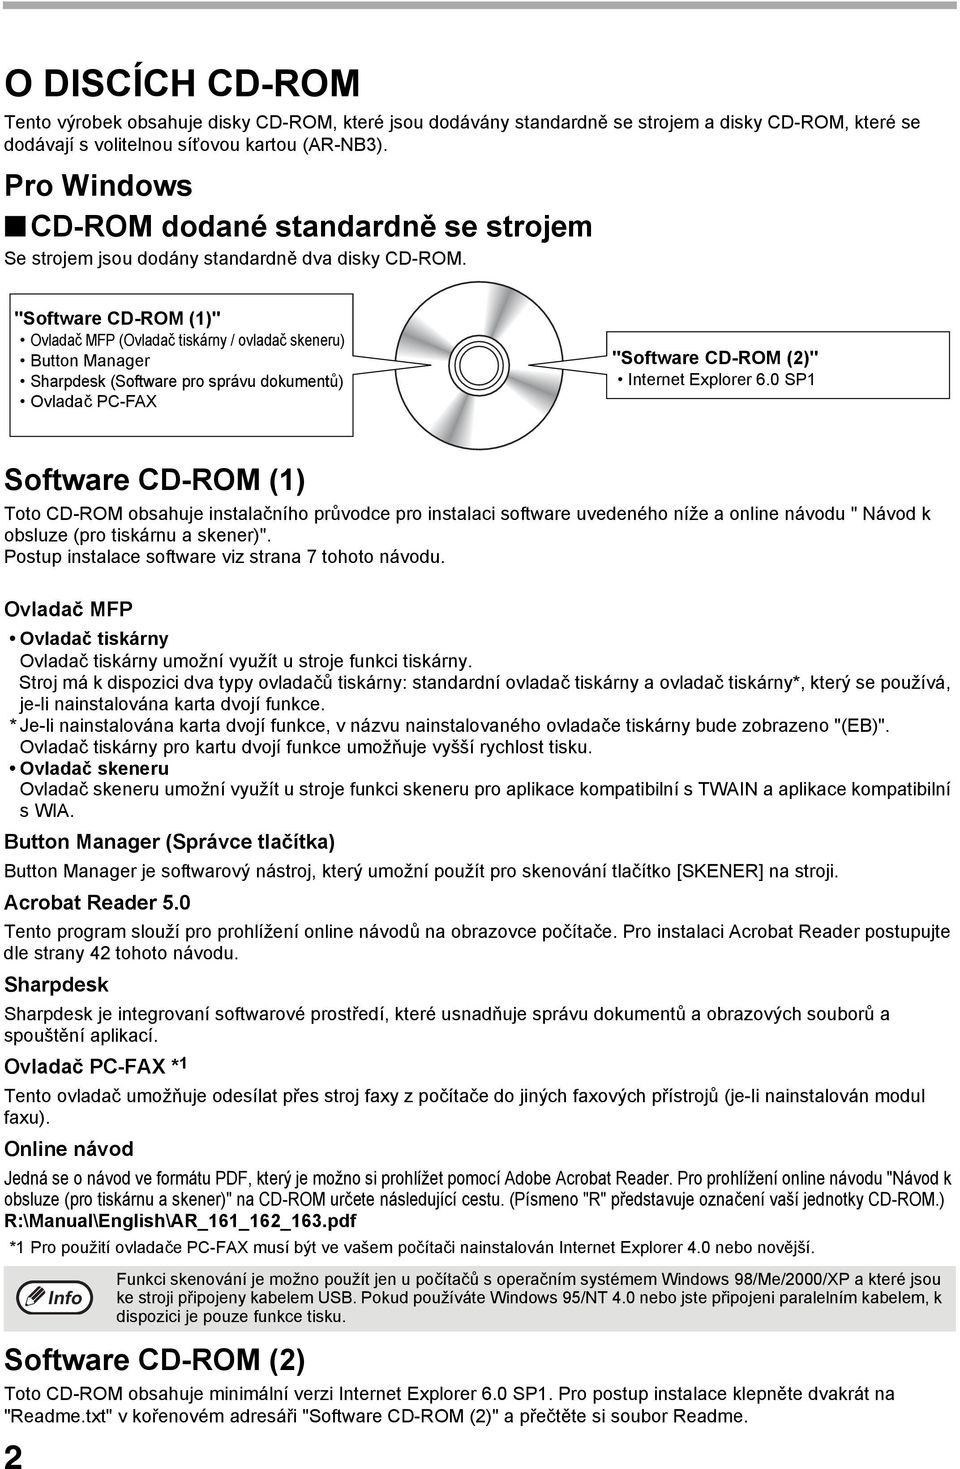 "Software CD-ROM ()" Ovladač MFP (Ovladač tiskárny / ovladač skeneru) Button Manager Sharpdesk (Software pro správu dokumentů) Ovladač PC-FAX "Software CD-ROM ()" Internet Explorer 6.